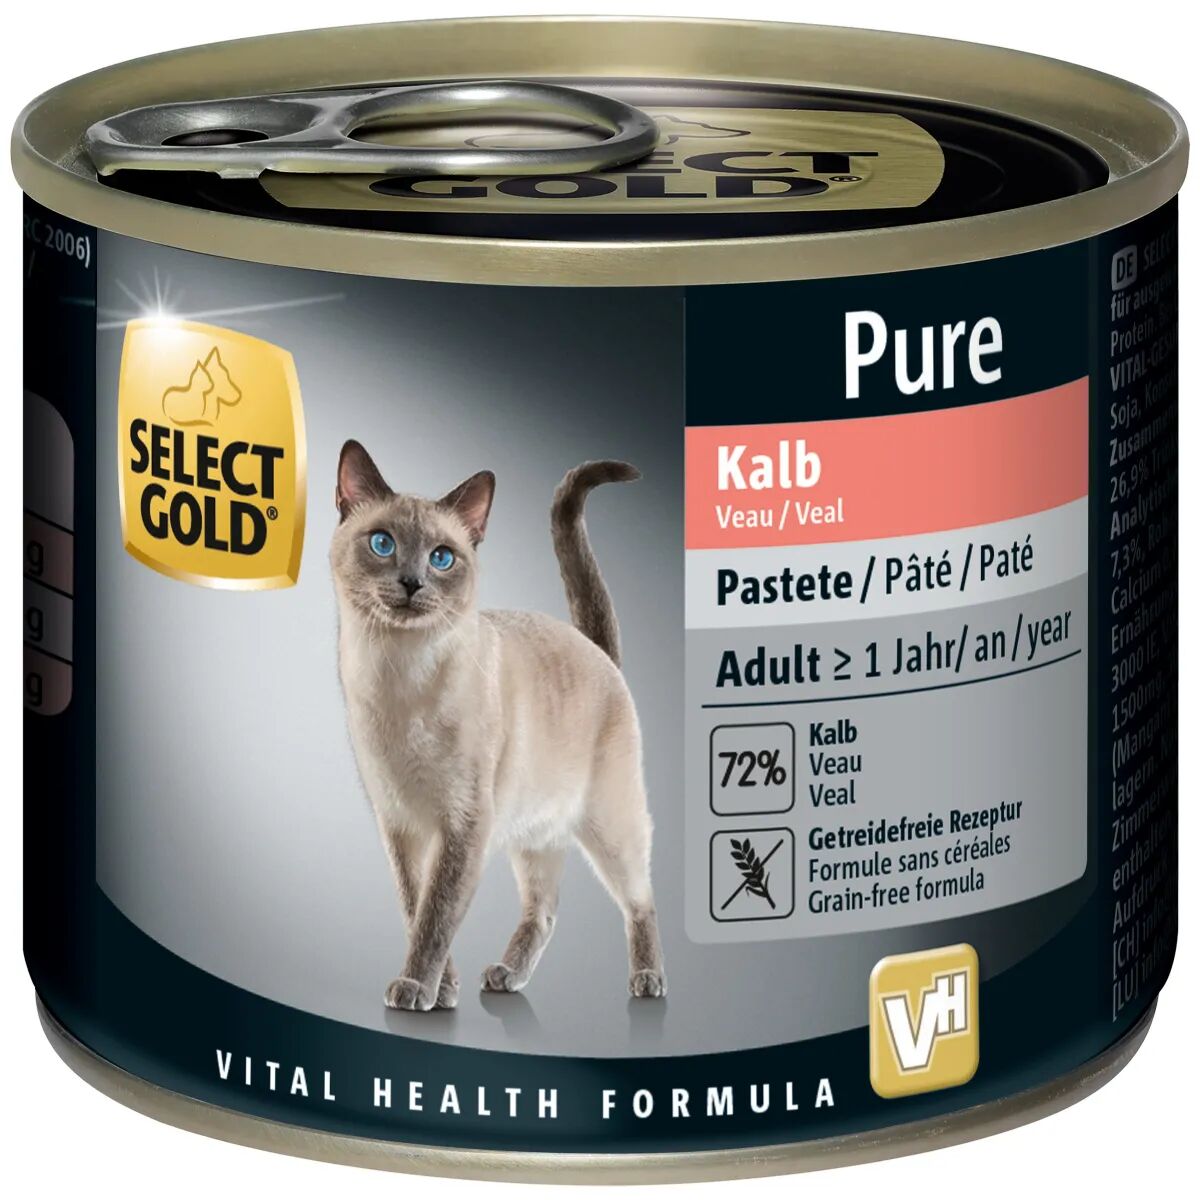 SELECT GOLD Pure Cat Adult Lattina Multipack 6x200G VITELLO